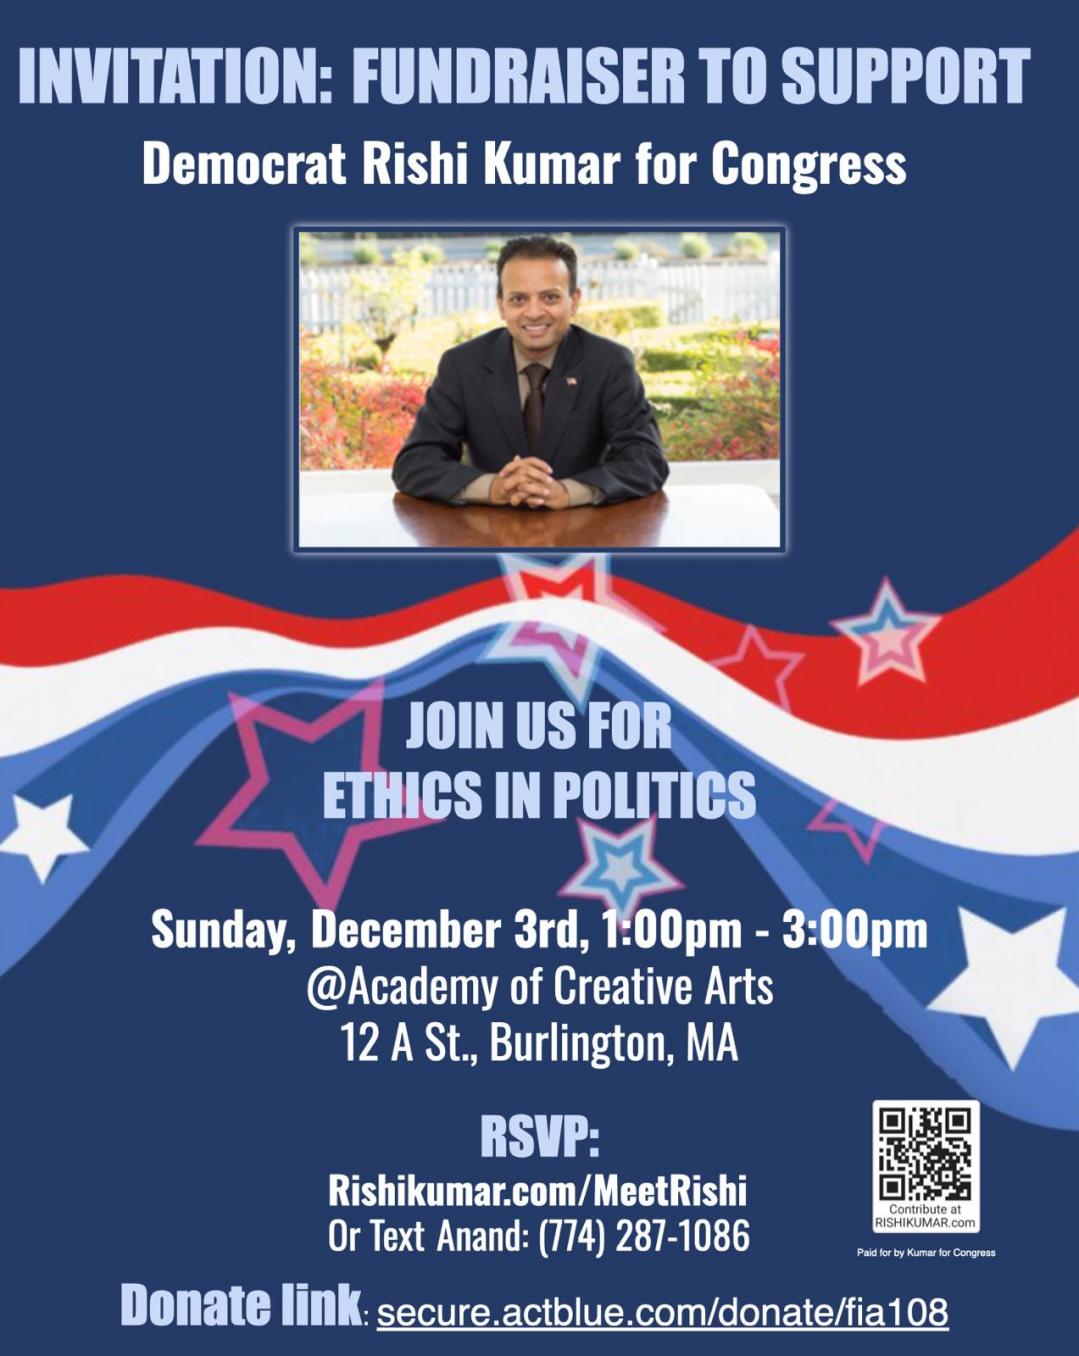 Fundraising Reception For The Next Indian-American US Congressman, Mr. Rishi Kumar